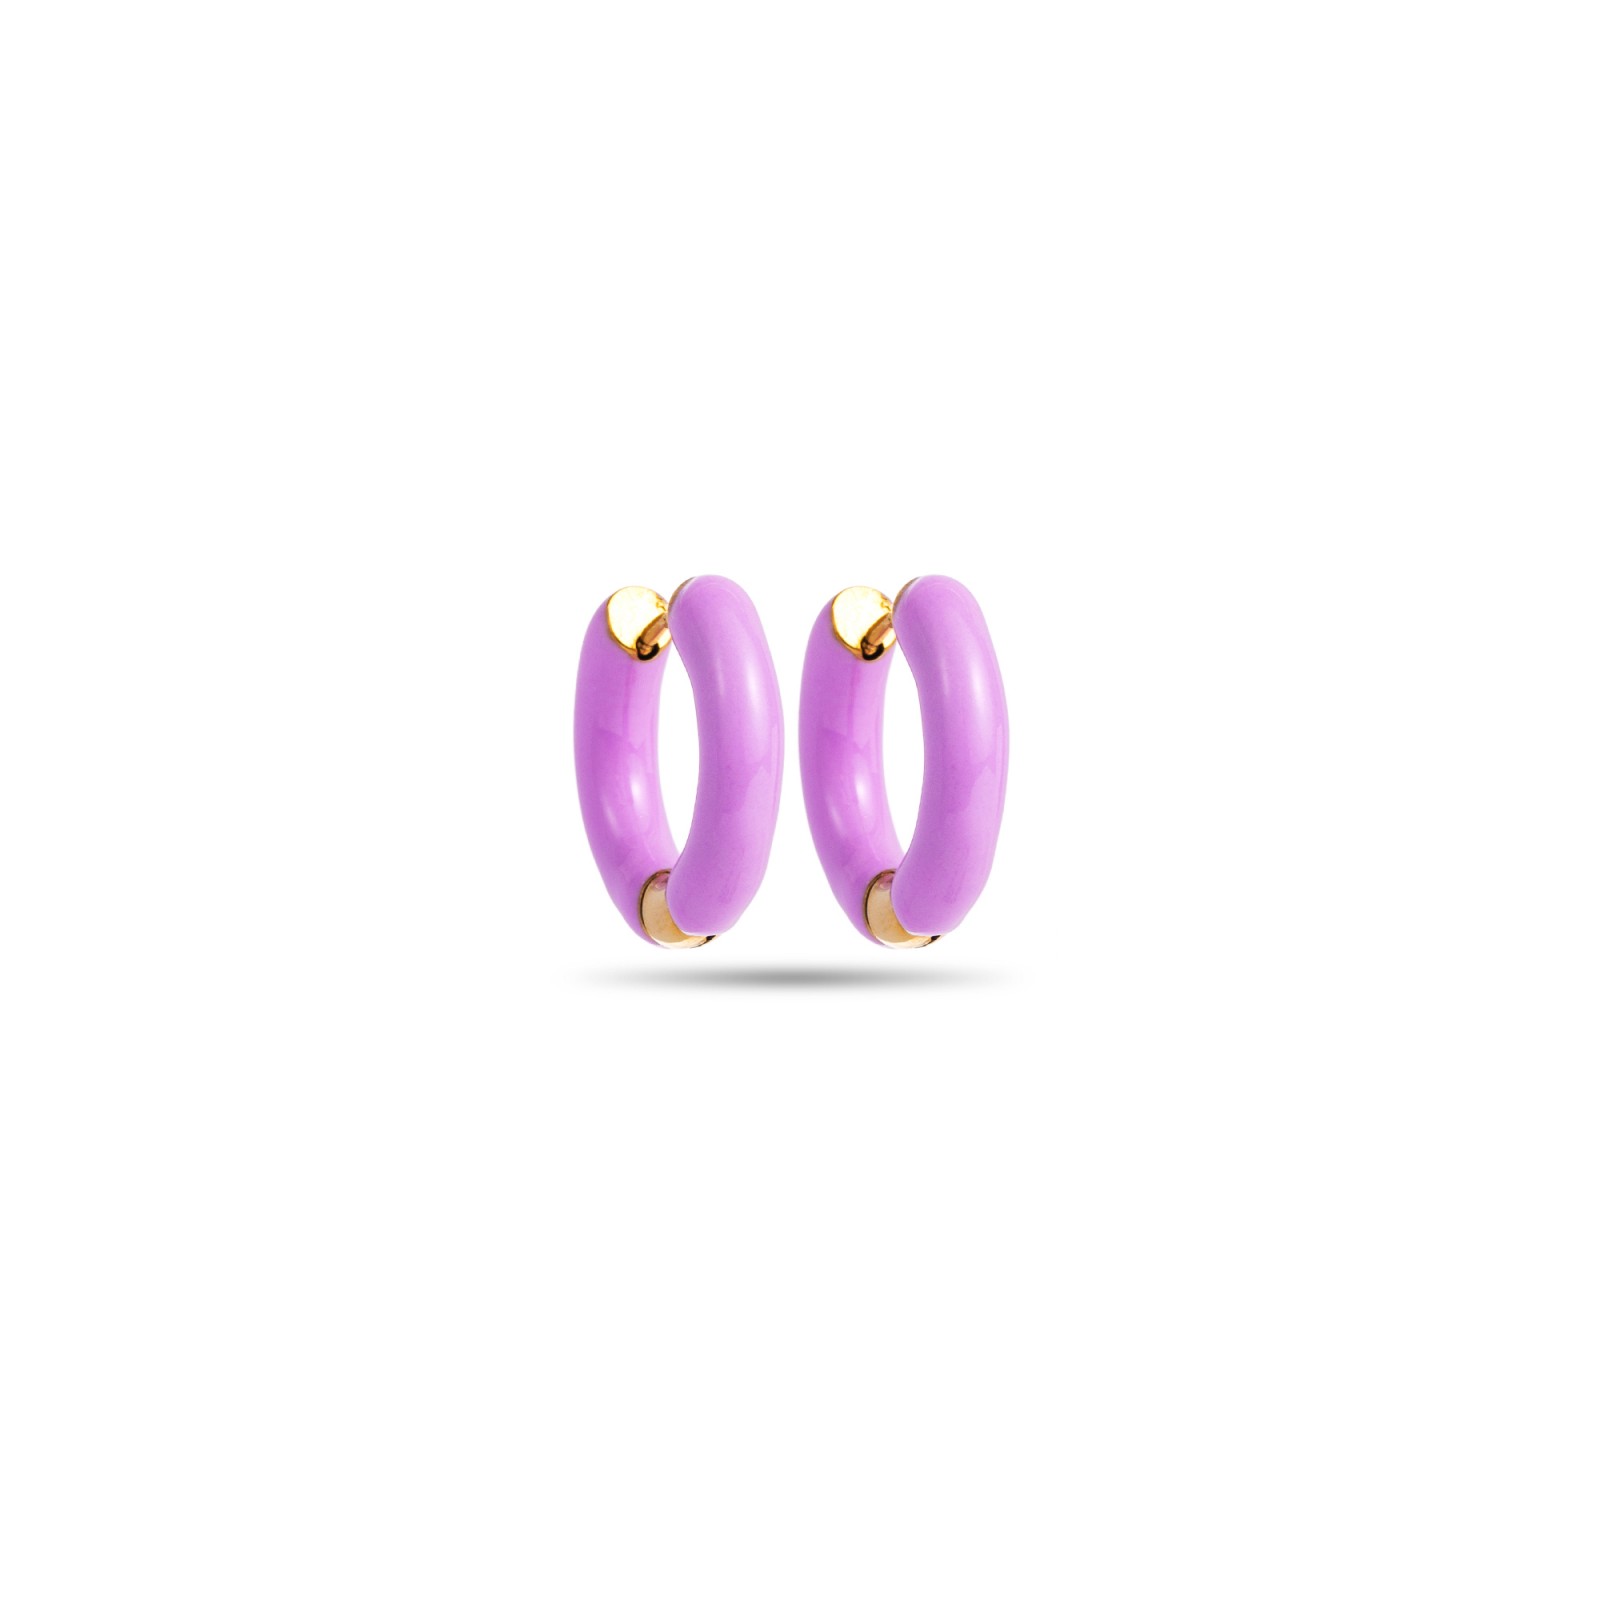 Colored Mini Hoops Earrings Color:Parma